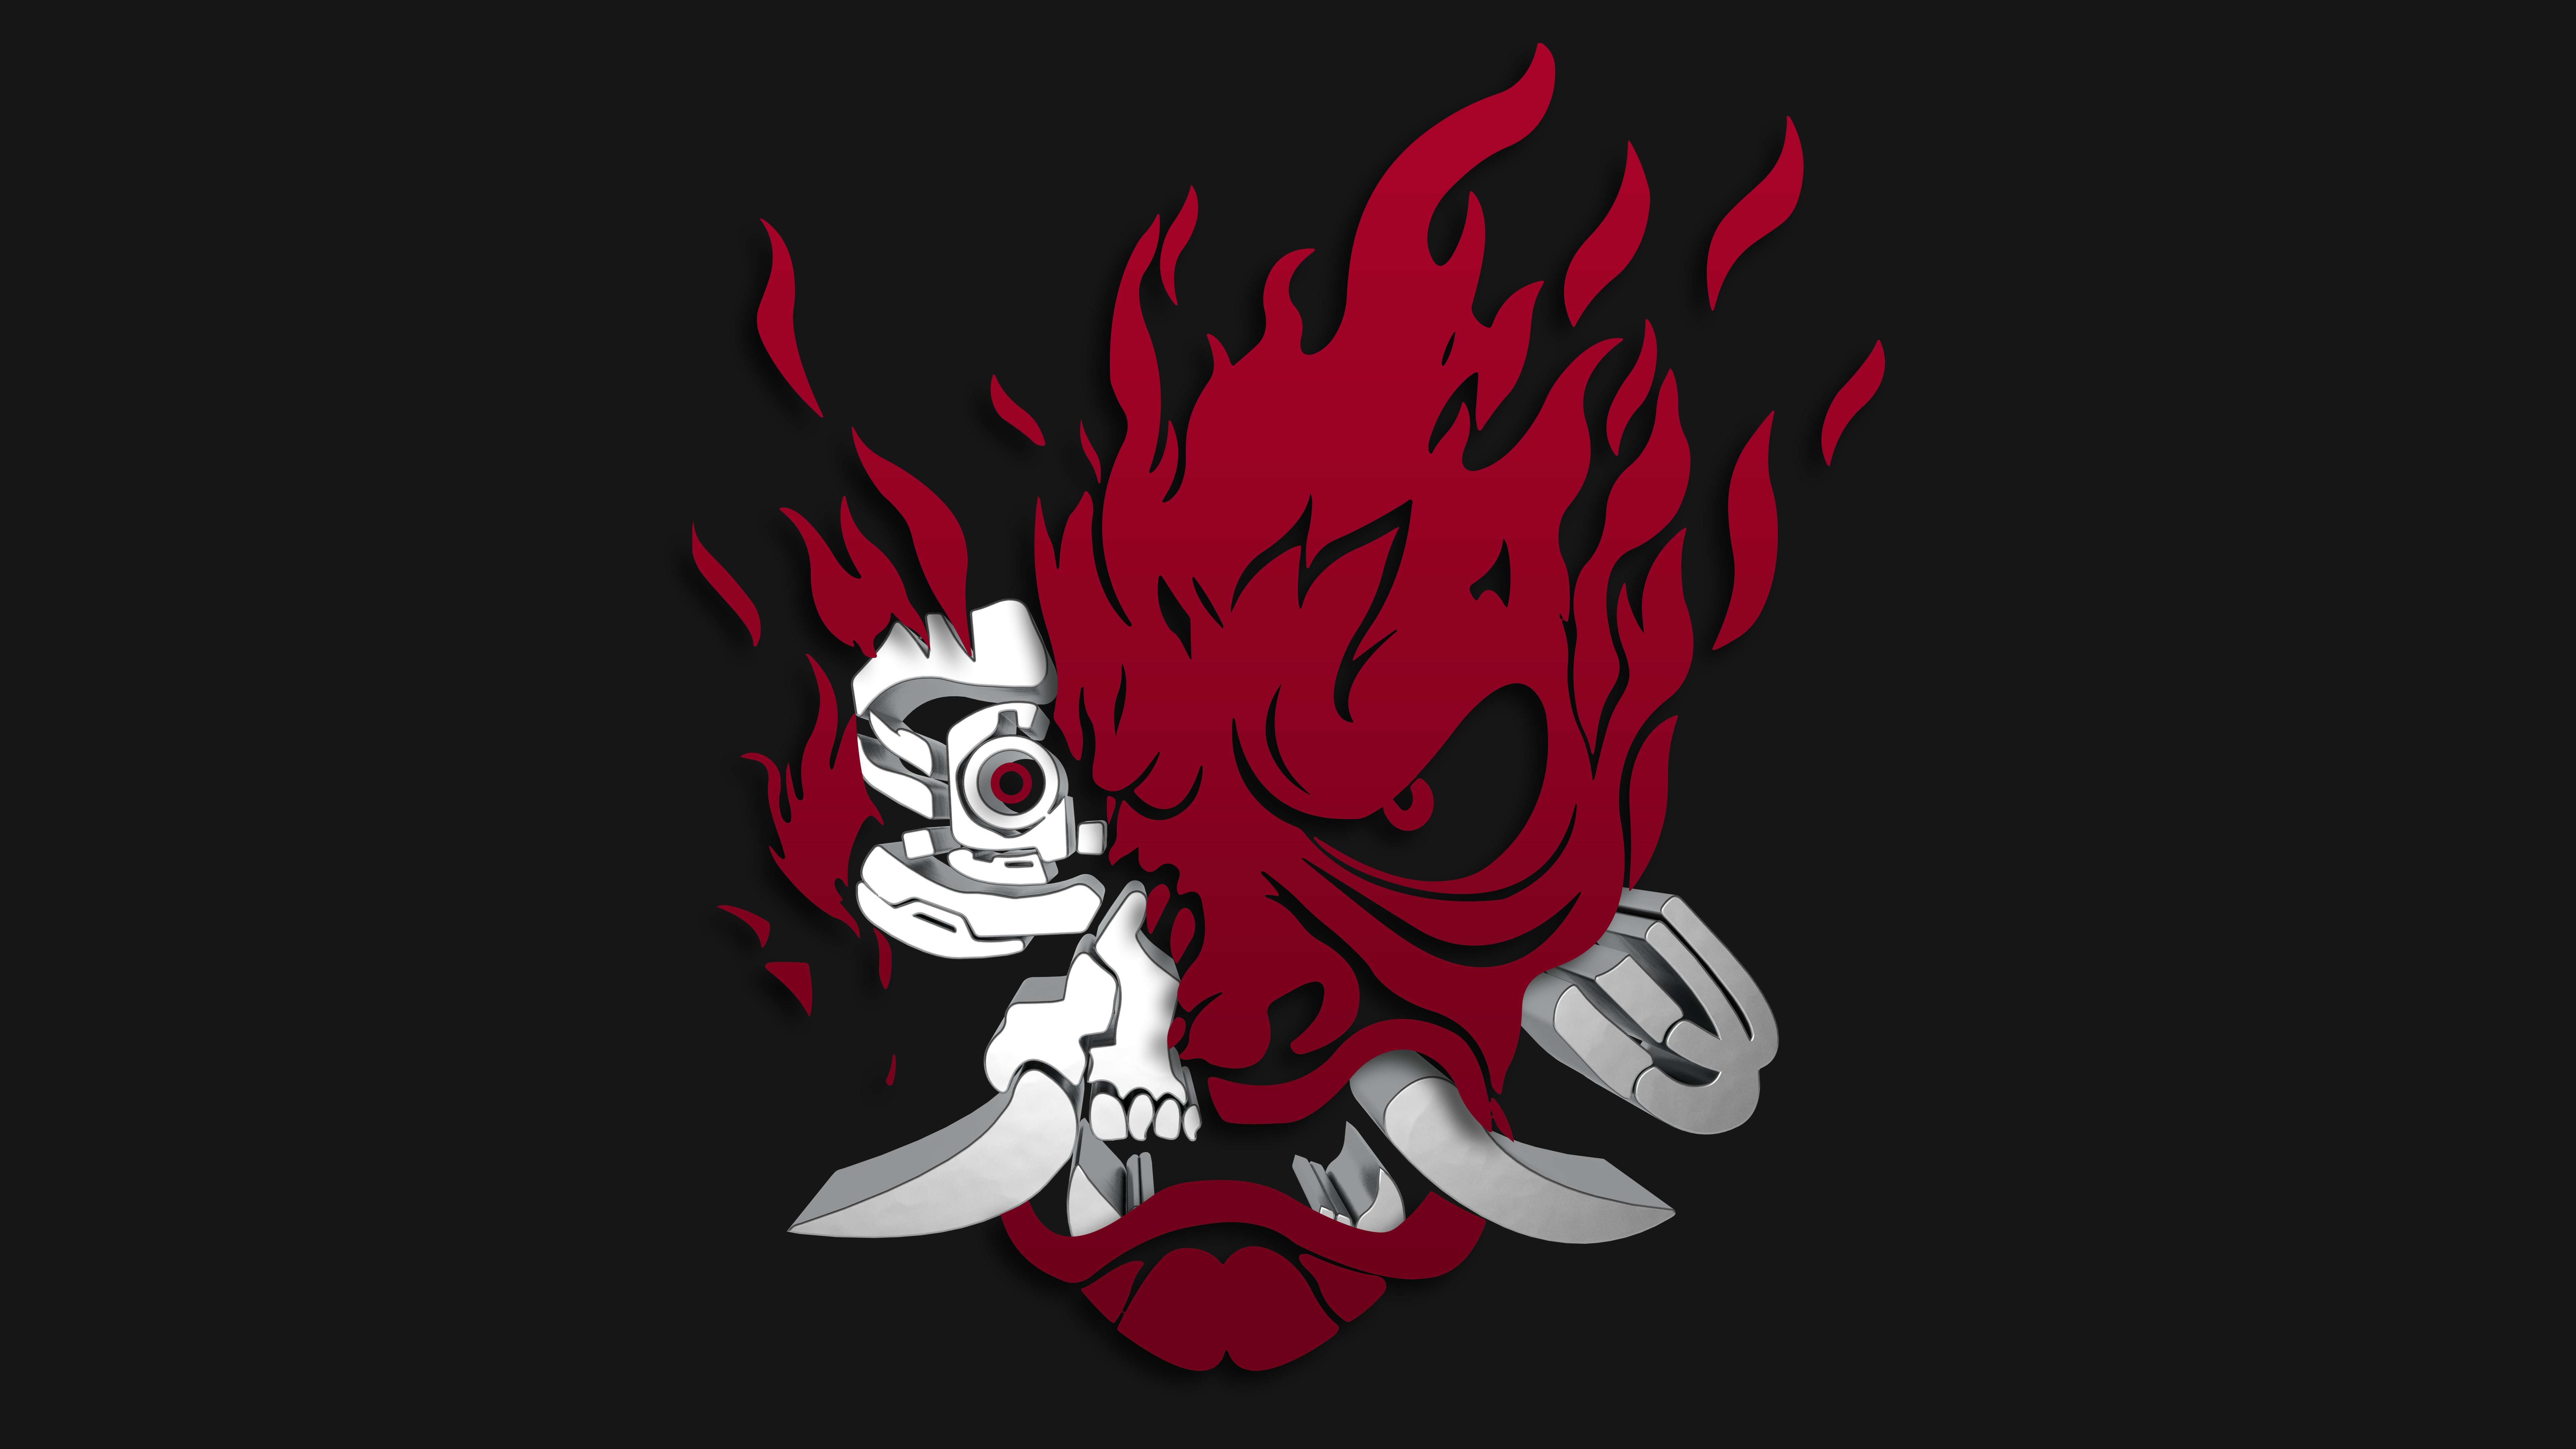 General 7680x4320 cyberpunk samurai logo video game art demon cyborg Mascot Logo red